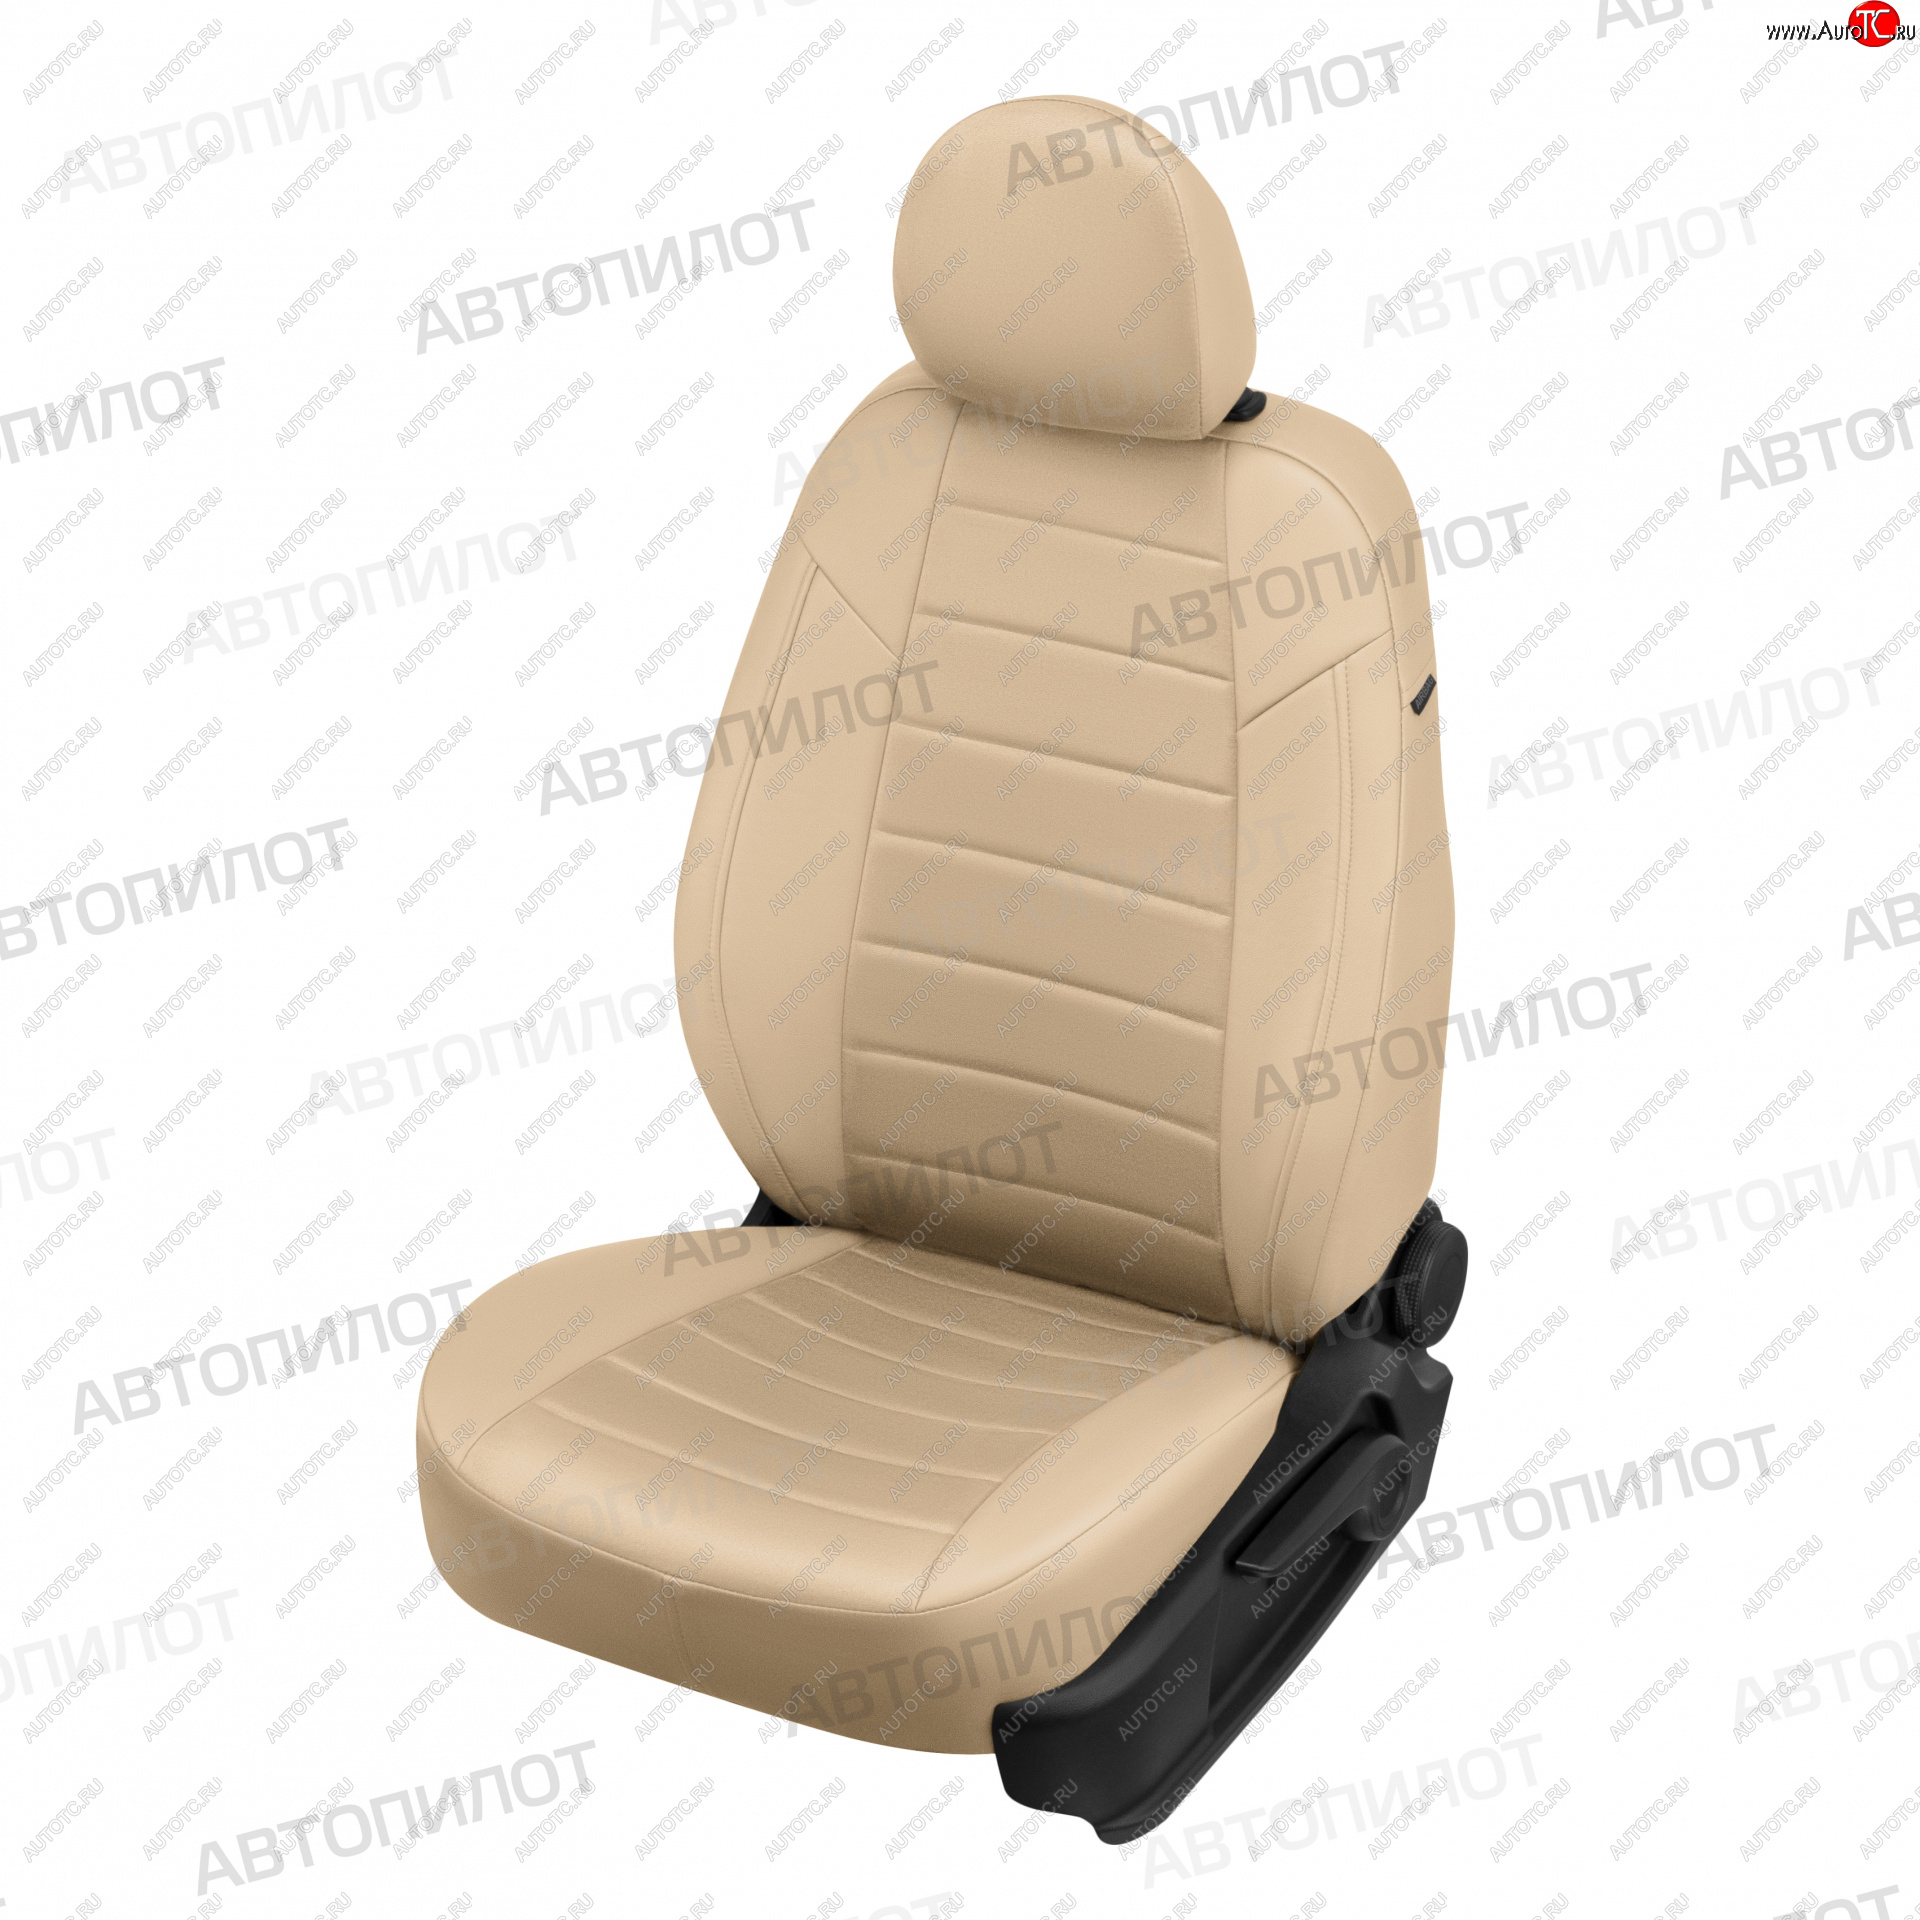 13 449 р. Чехлы сидений (экокожа/алькантара) Автопилот Land Rover Discovery 3 L319 (2004-2009) (бежевый)